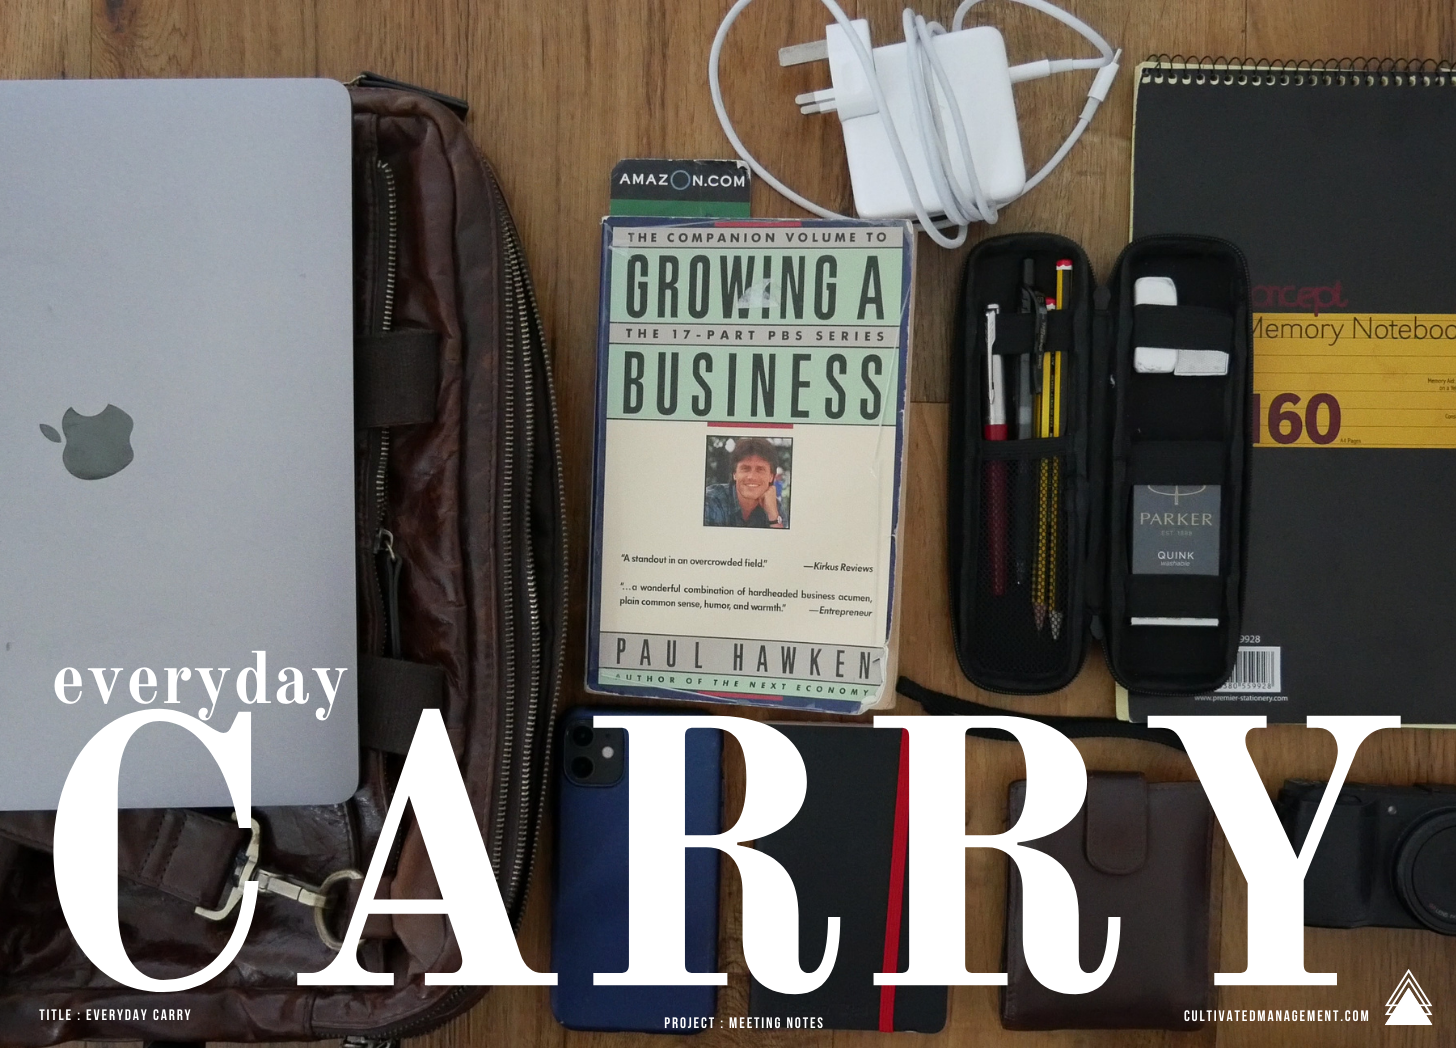 My Everyday Carry